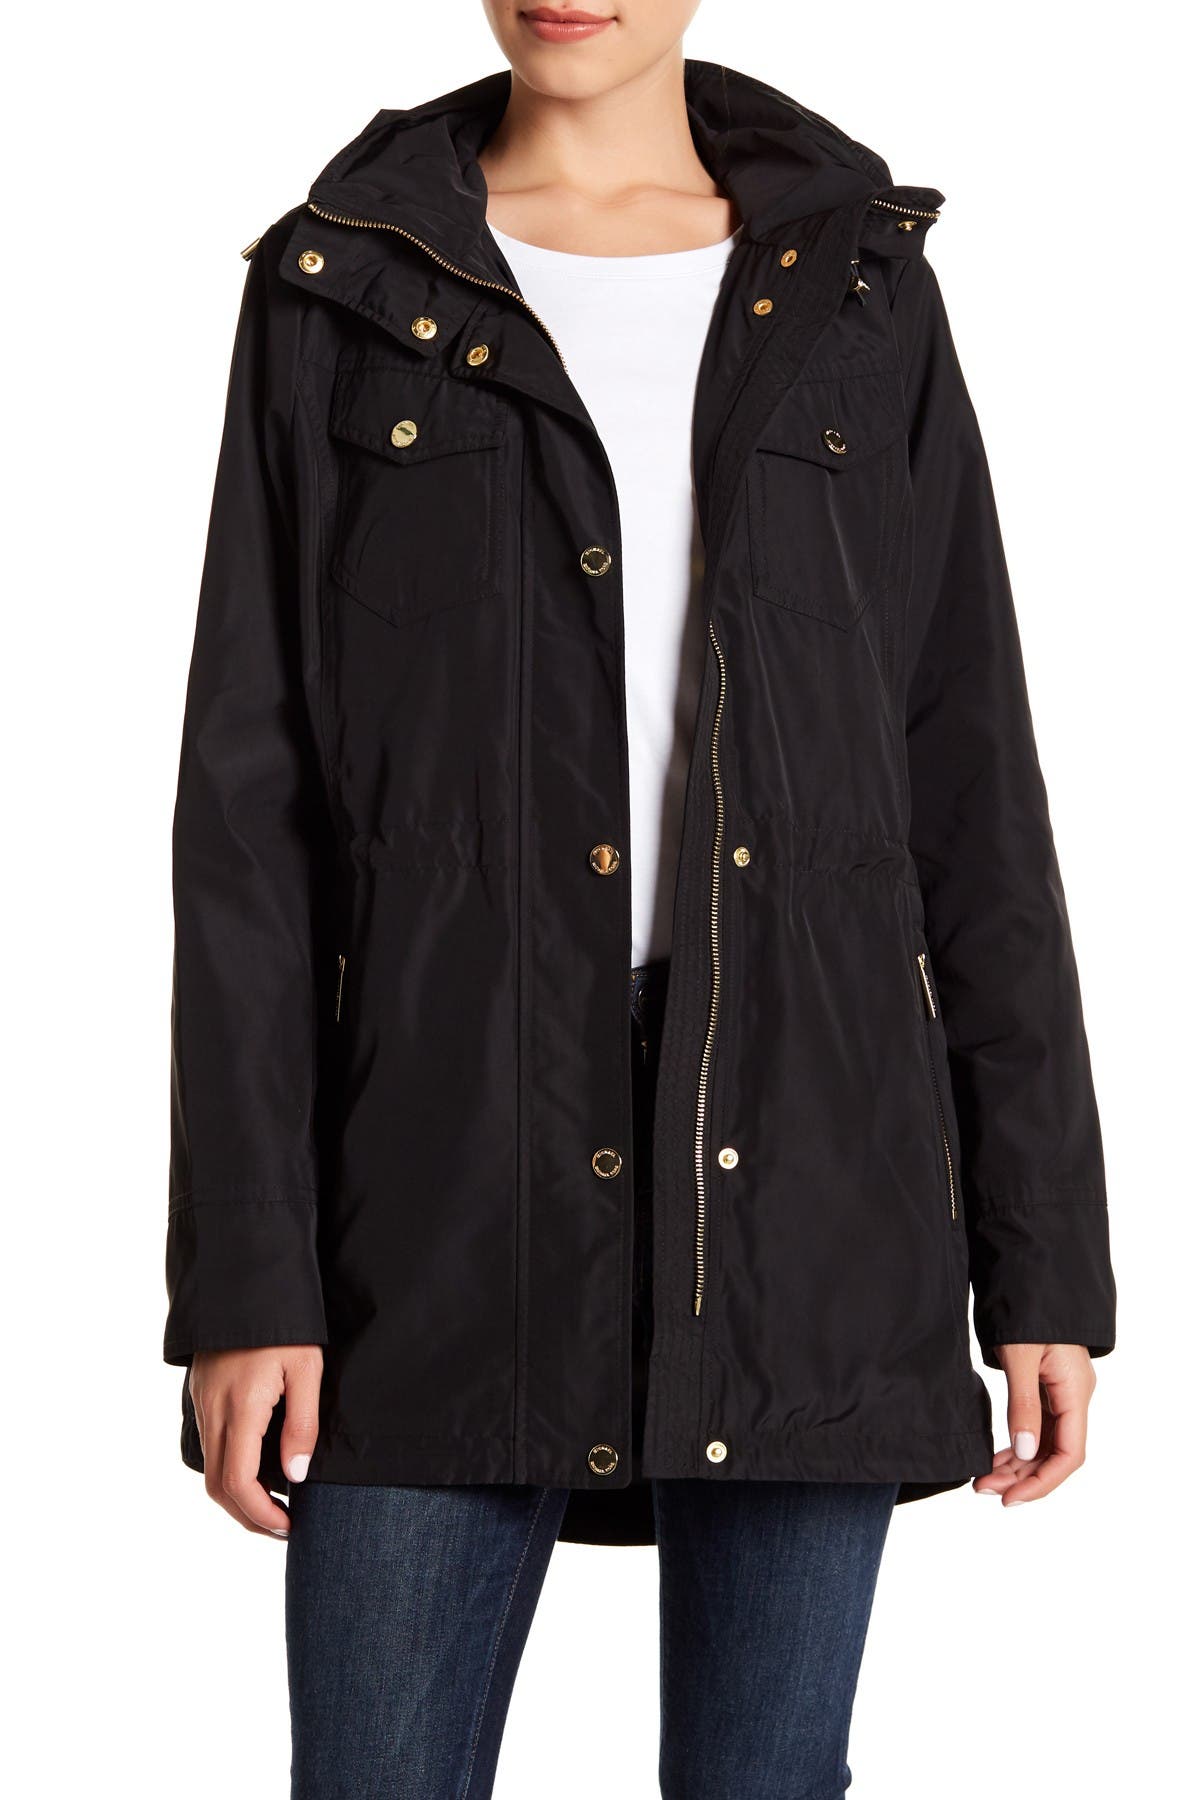 michael kors rain jackets with hood